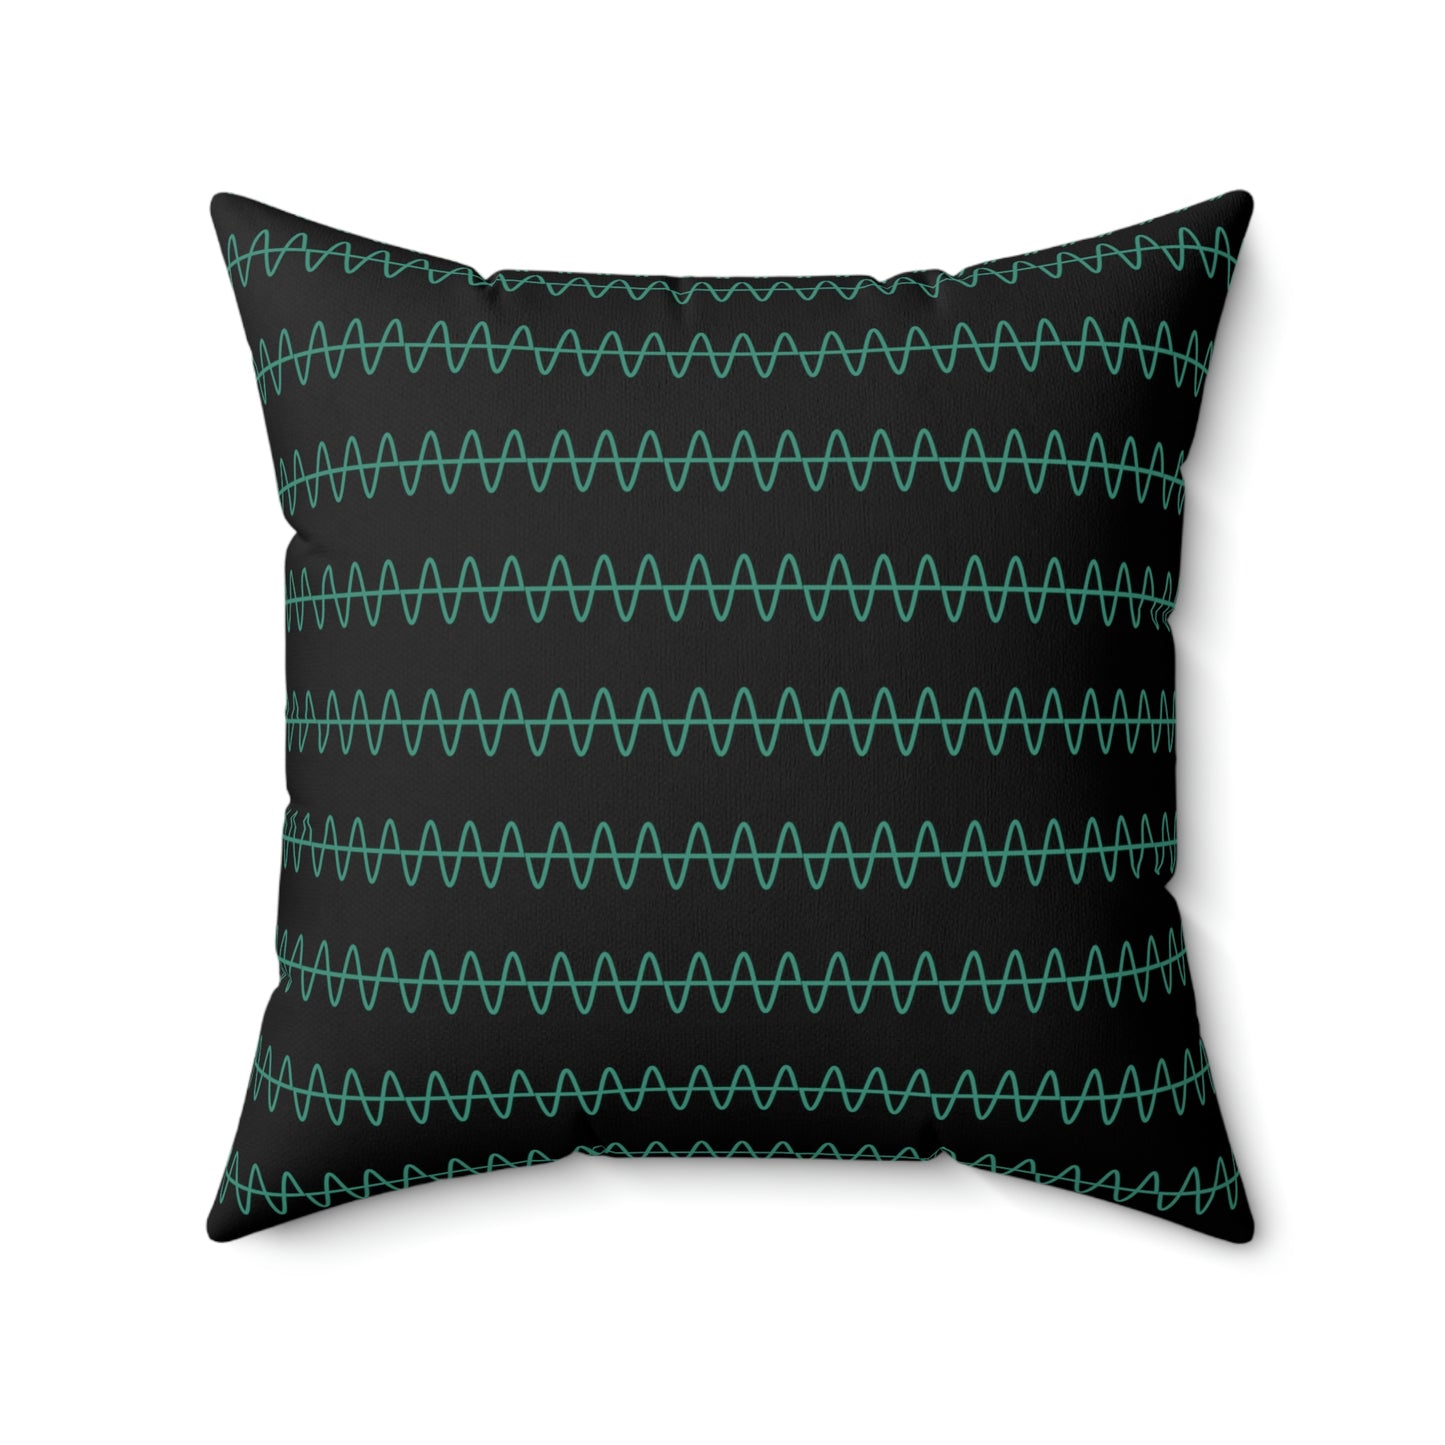 Spun Polyester Square Pillow Case “Snake Line 2.0 on Black”